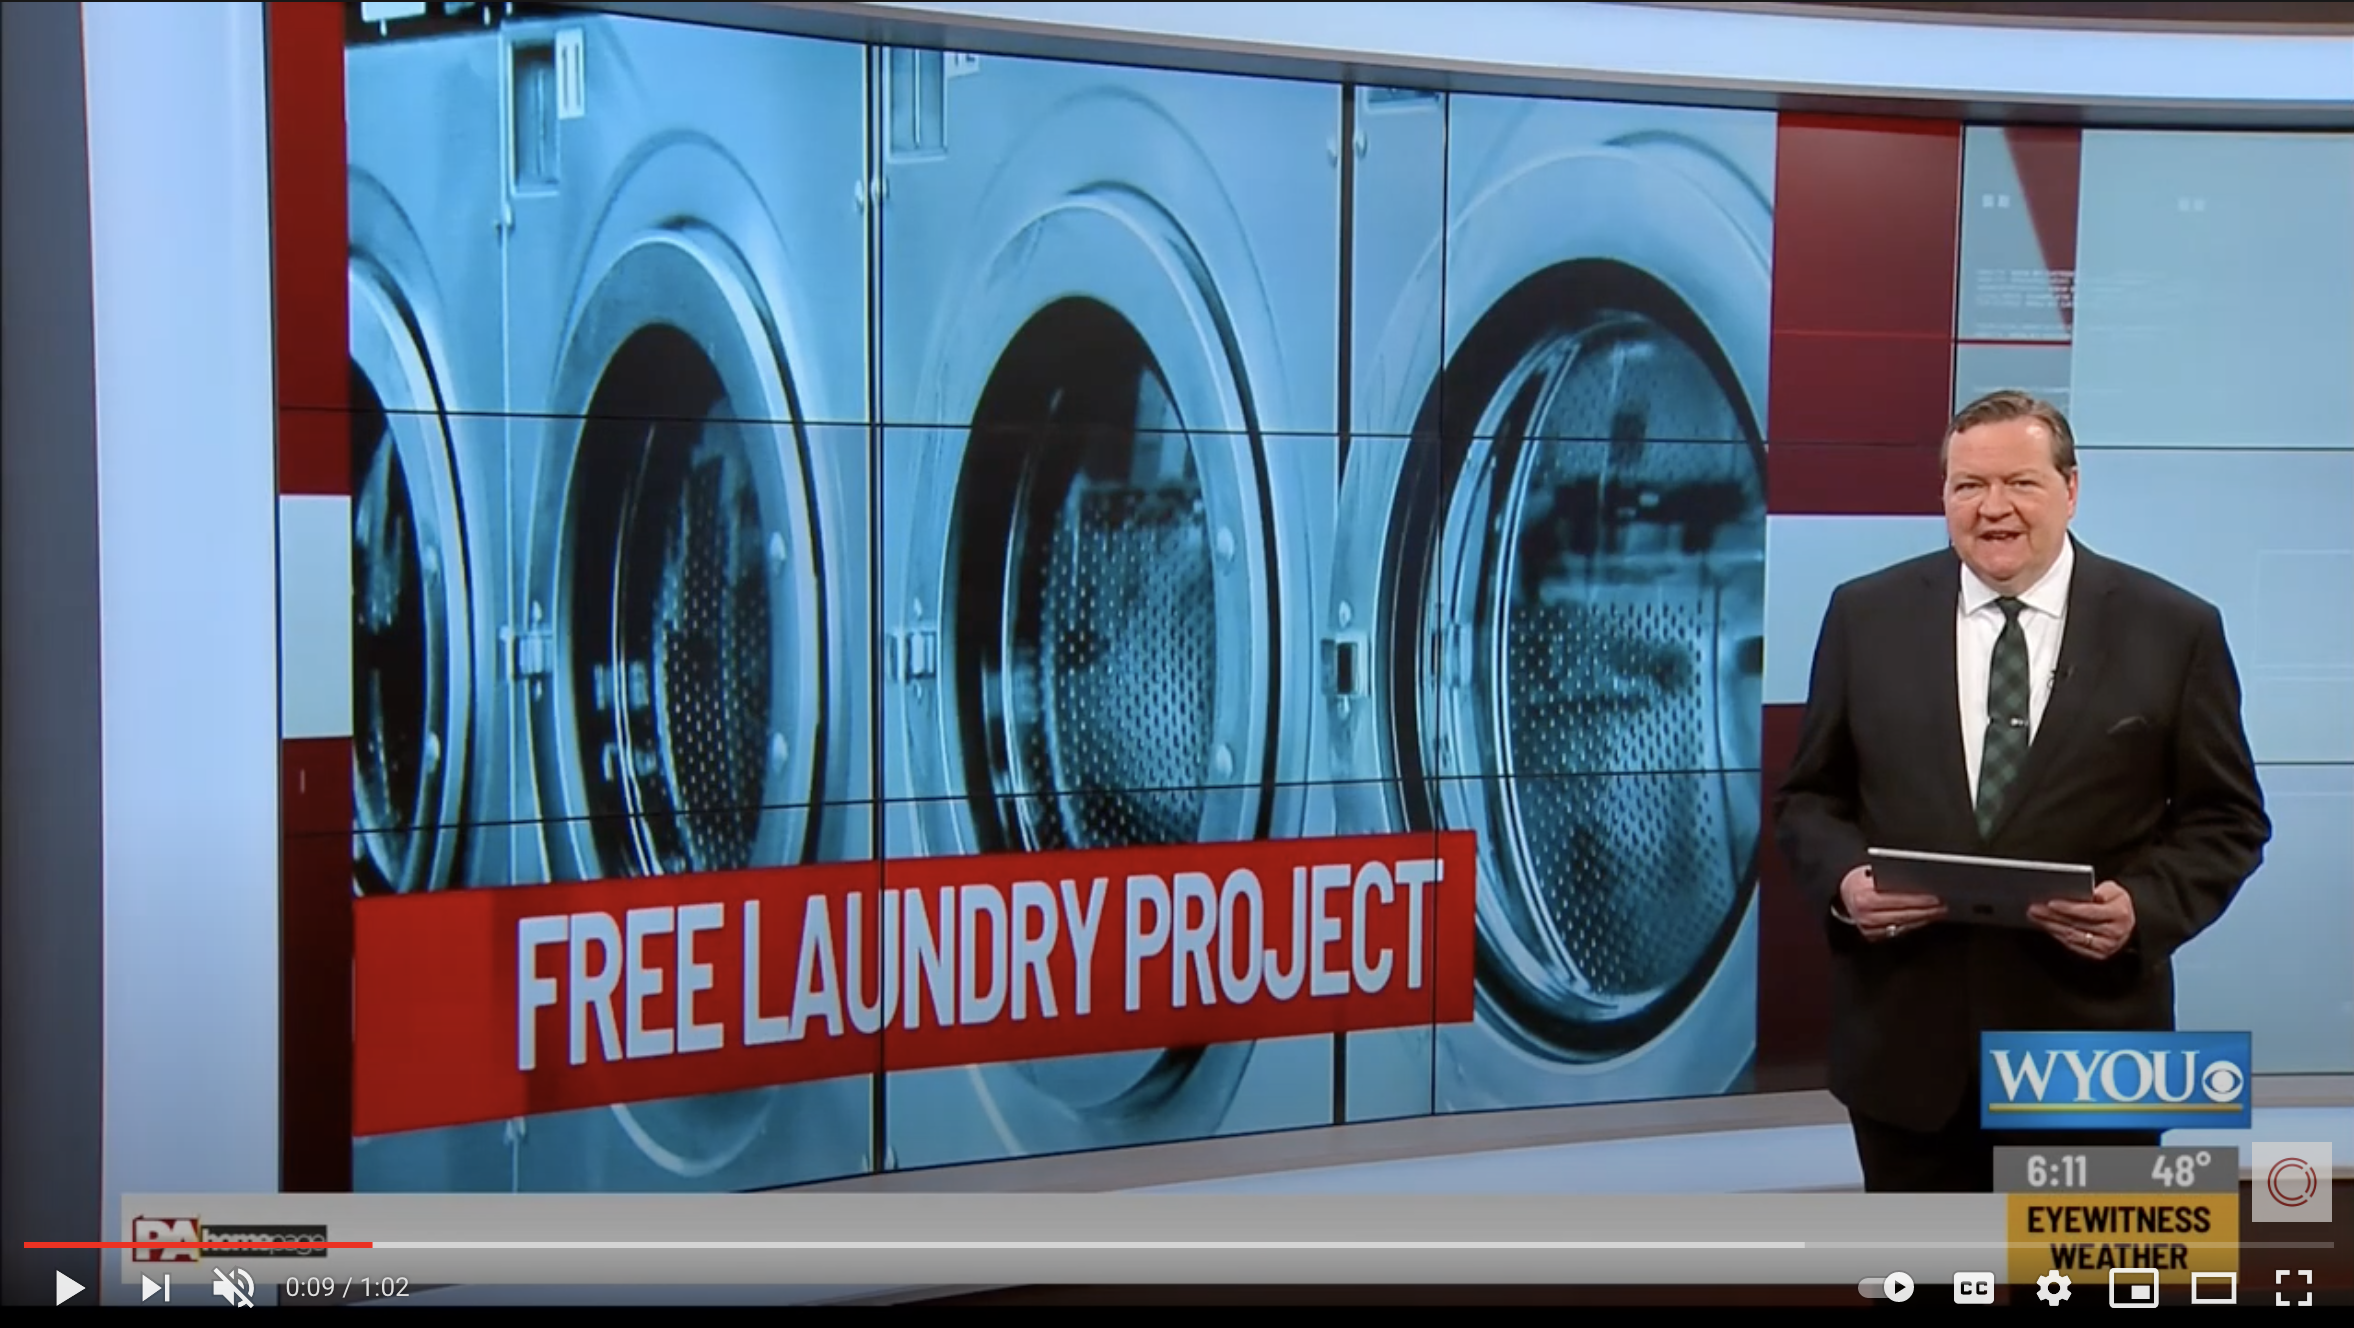 Eyewitness News Scranton – Laundry Project Story